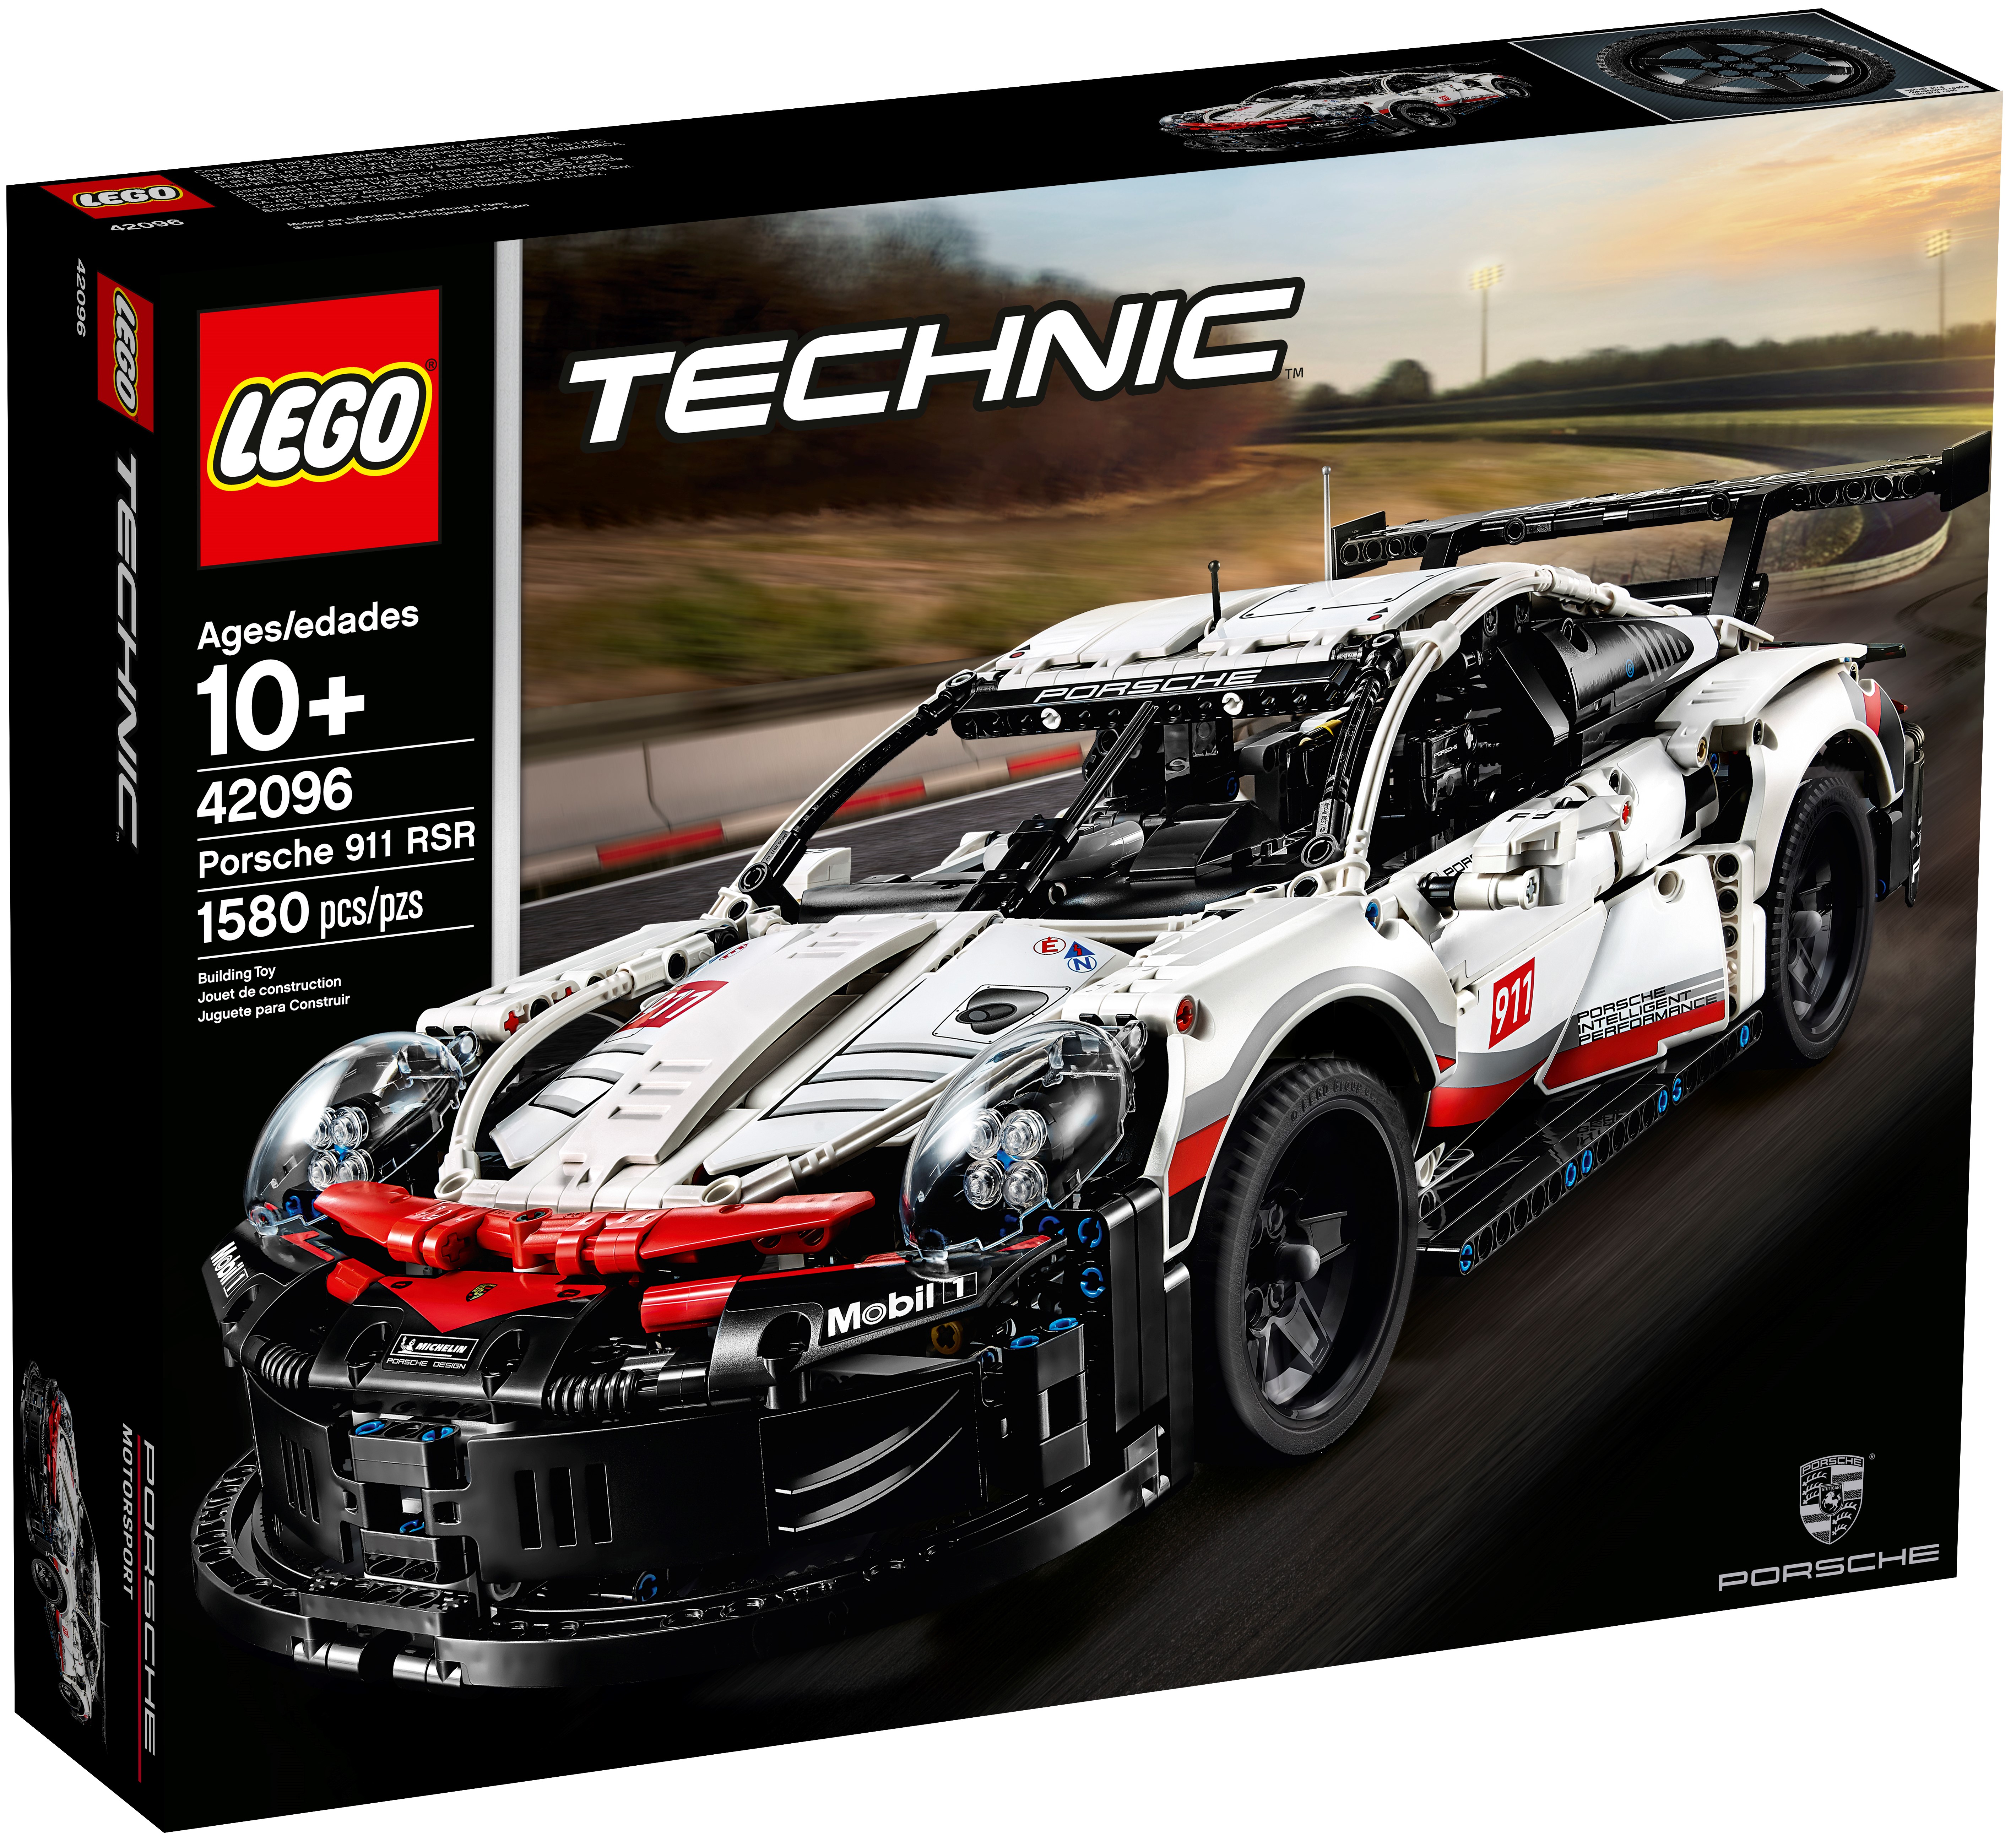 Colourful Exclusive Collectible Model LEGO 42096 Technic Porsche 911 RSR Race Car Advanced Building Set